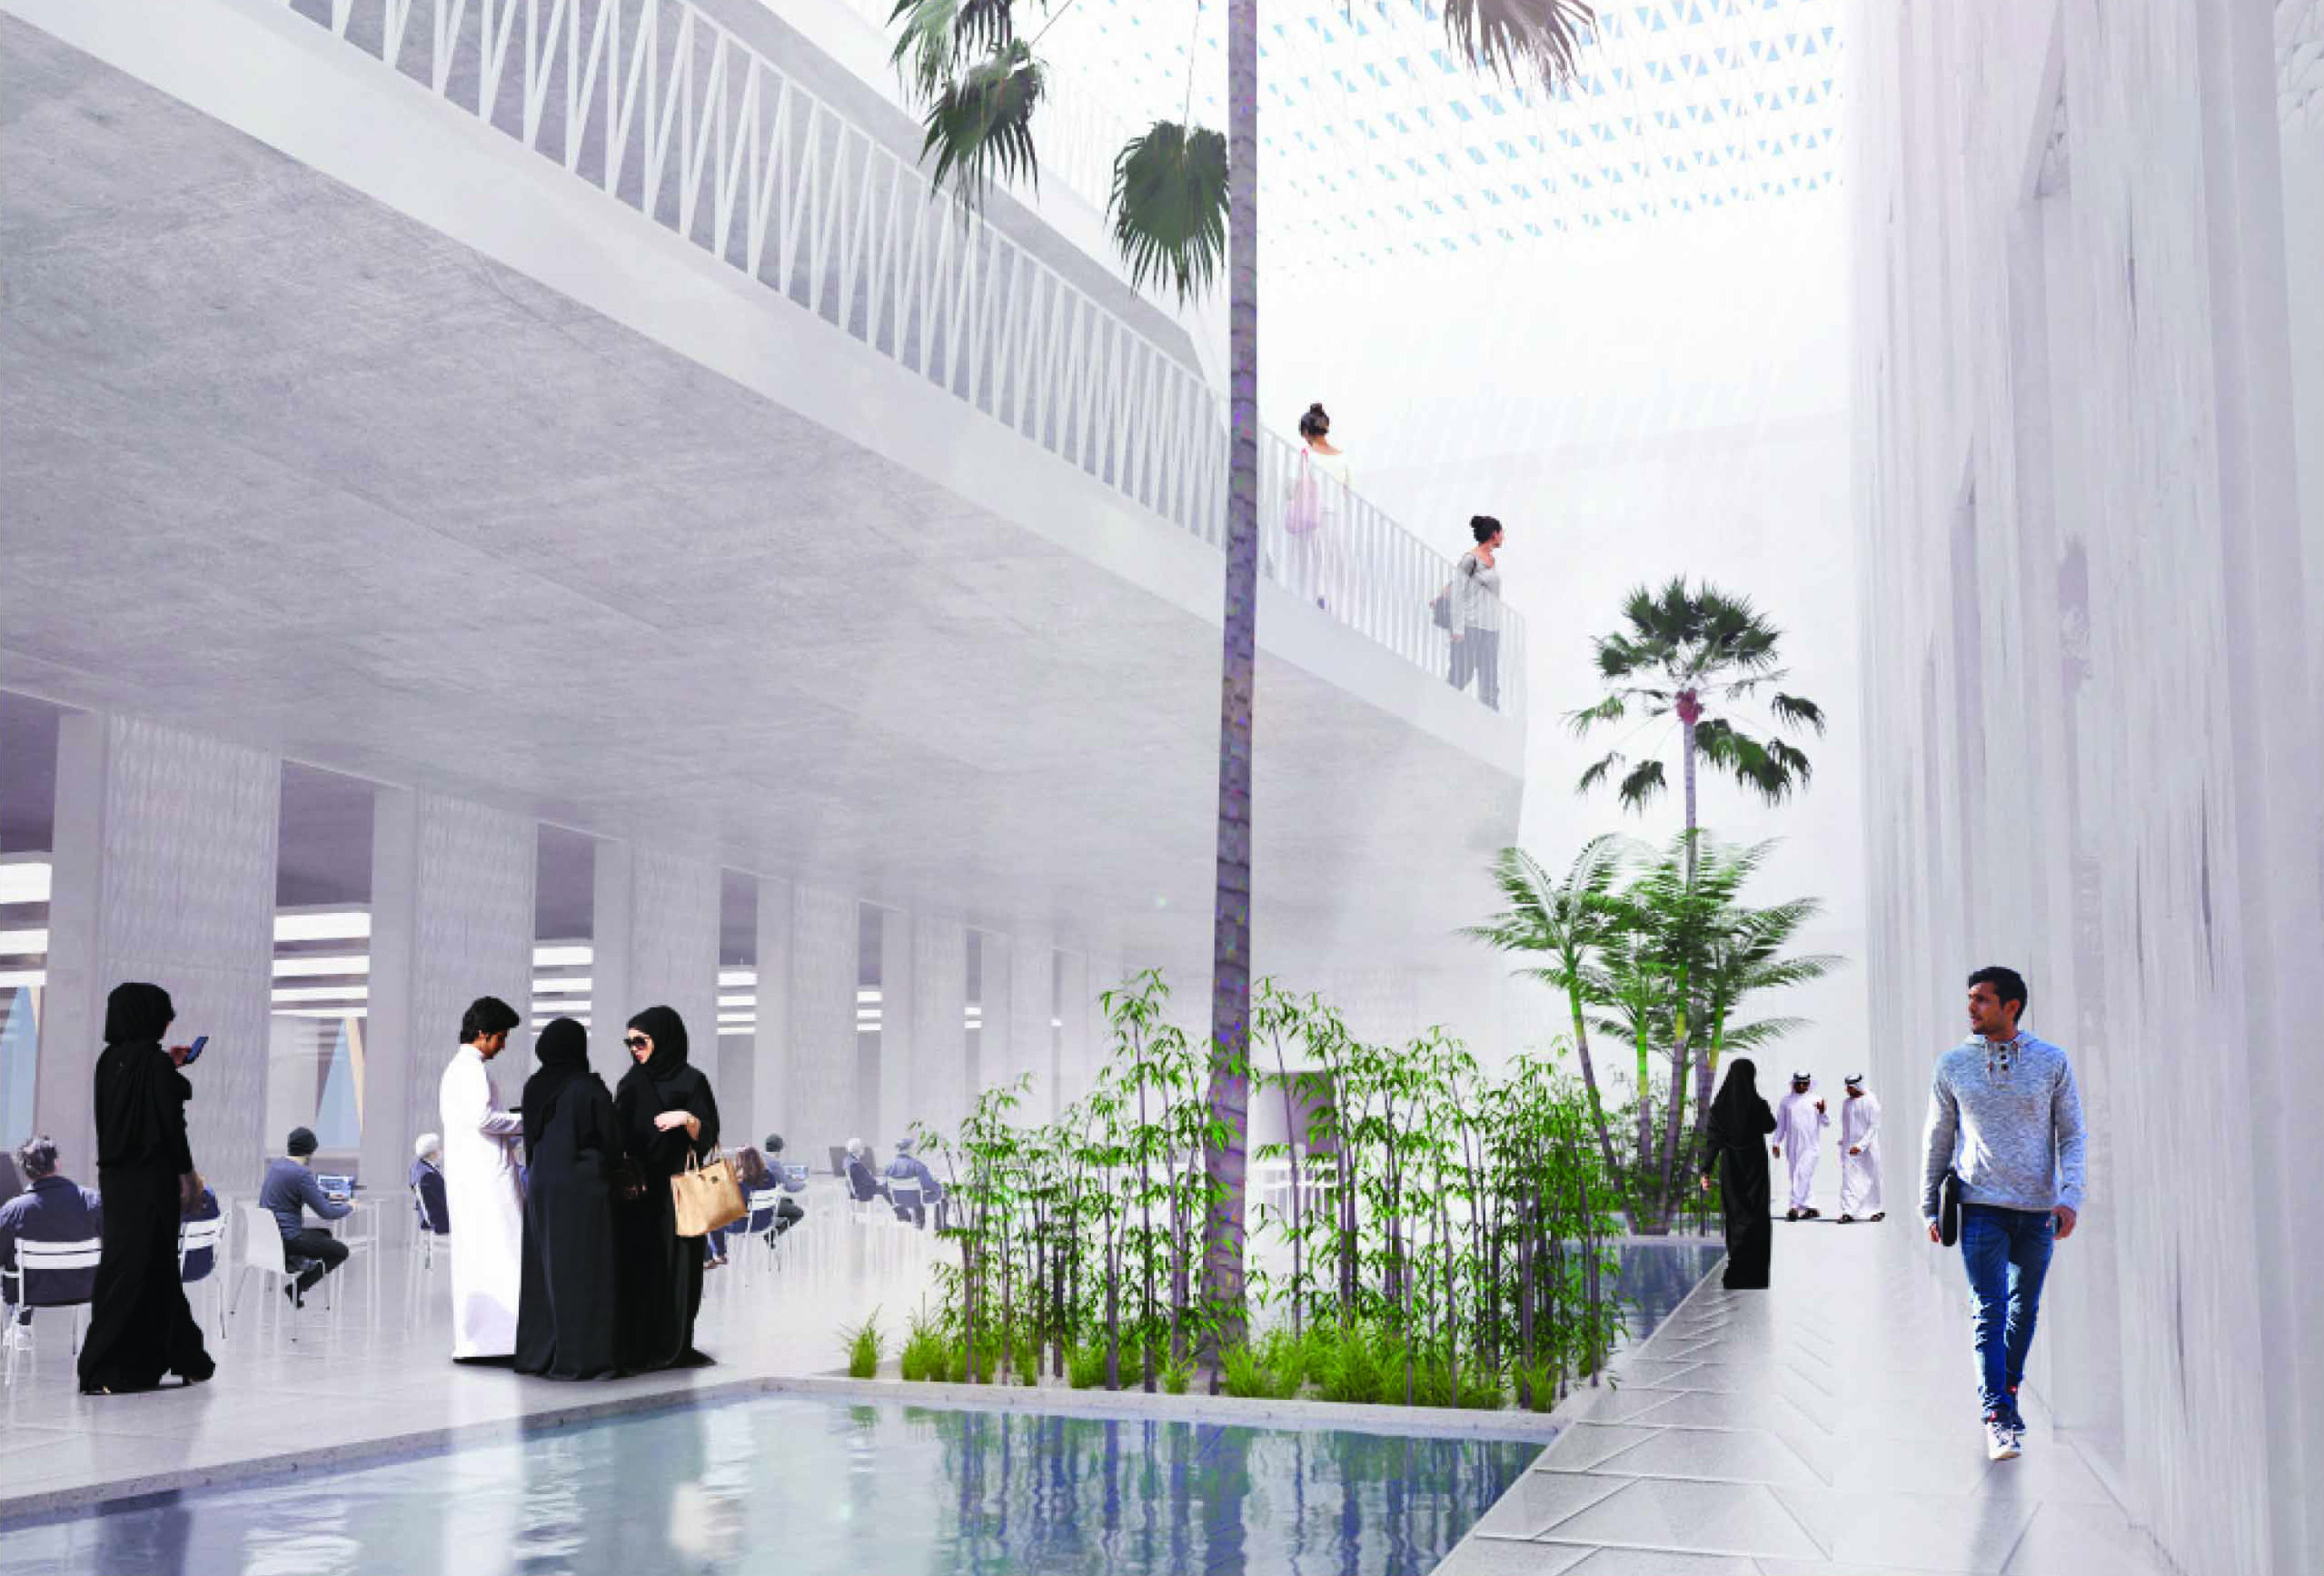 University of Aberdeen to build new £100m campus in Qatar